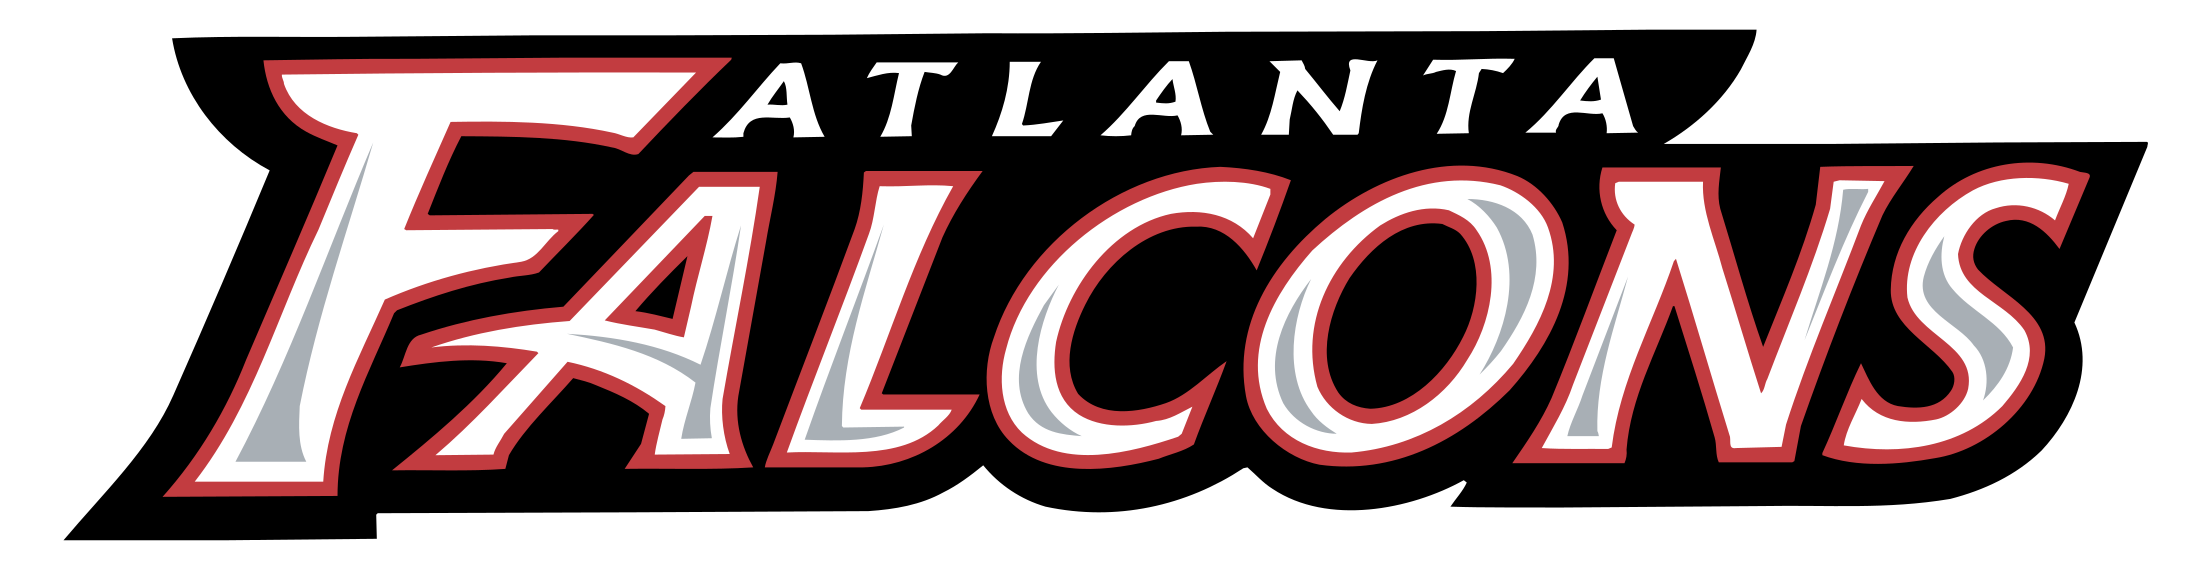 Atlanta Falcons Text Logo PNG HD Quality